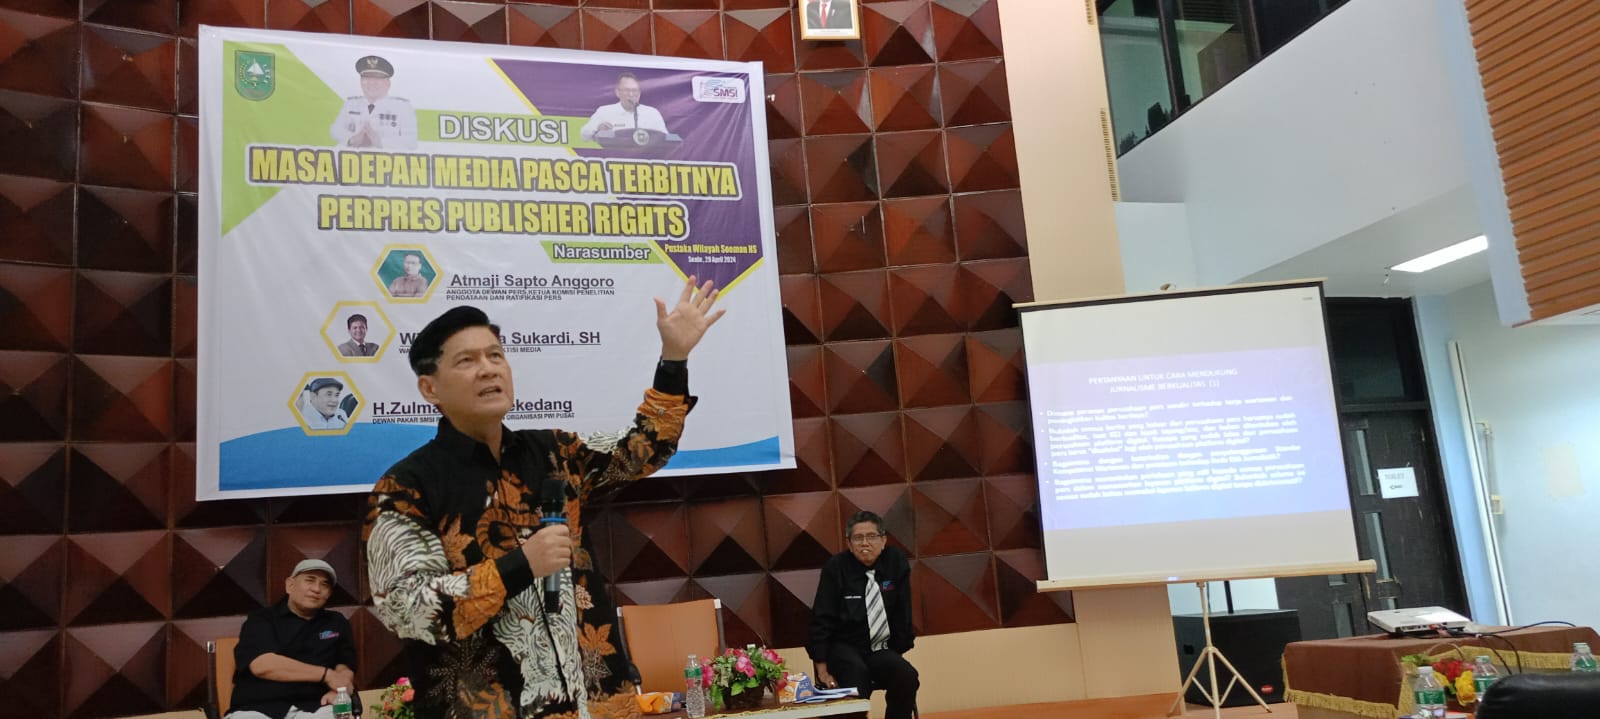 Perpres Publisher Rights Blunder, Wina Armada: Karpet Merah Kehancuran Pers Indonesia!